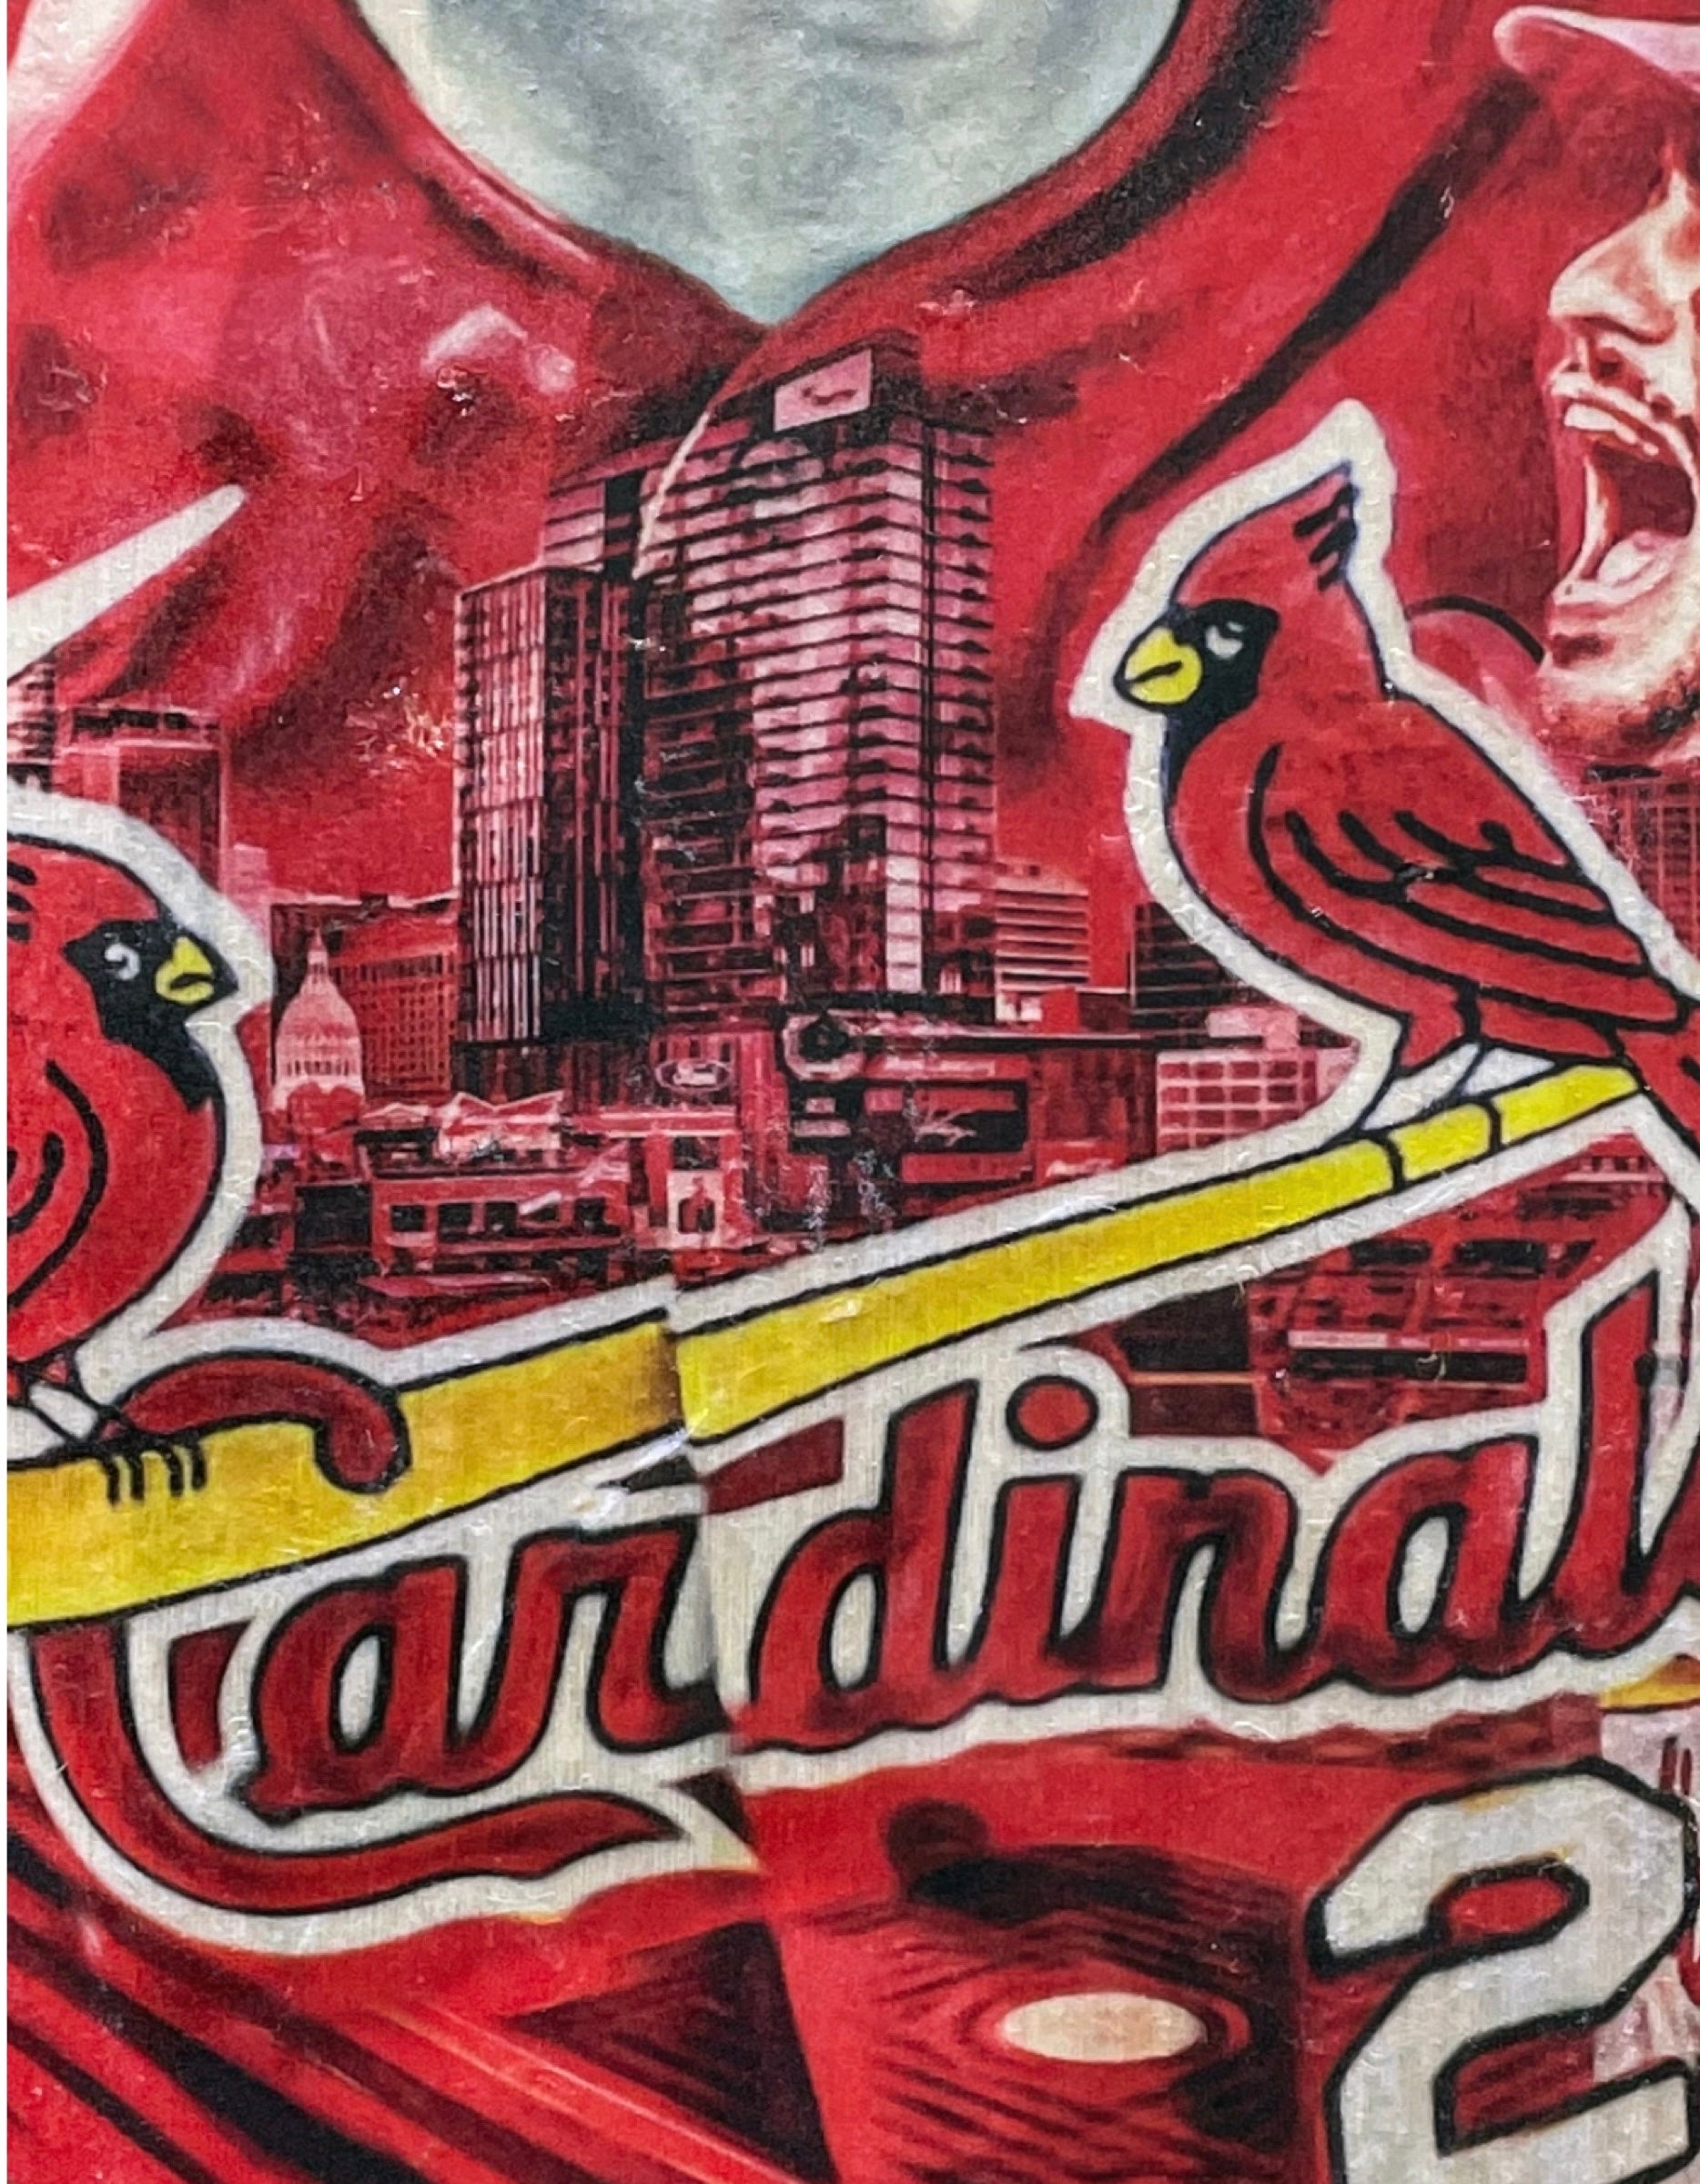 Louis Cardinals - Nolan Wall Poster, 22.375 Ez A Kategória. Mlb Home.